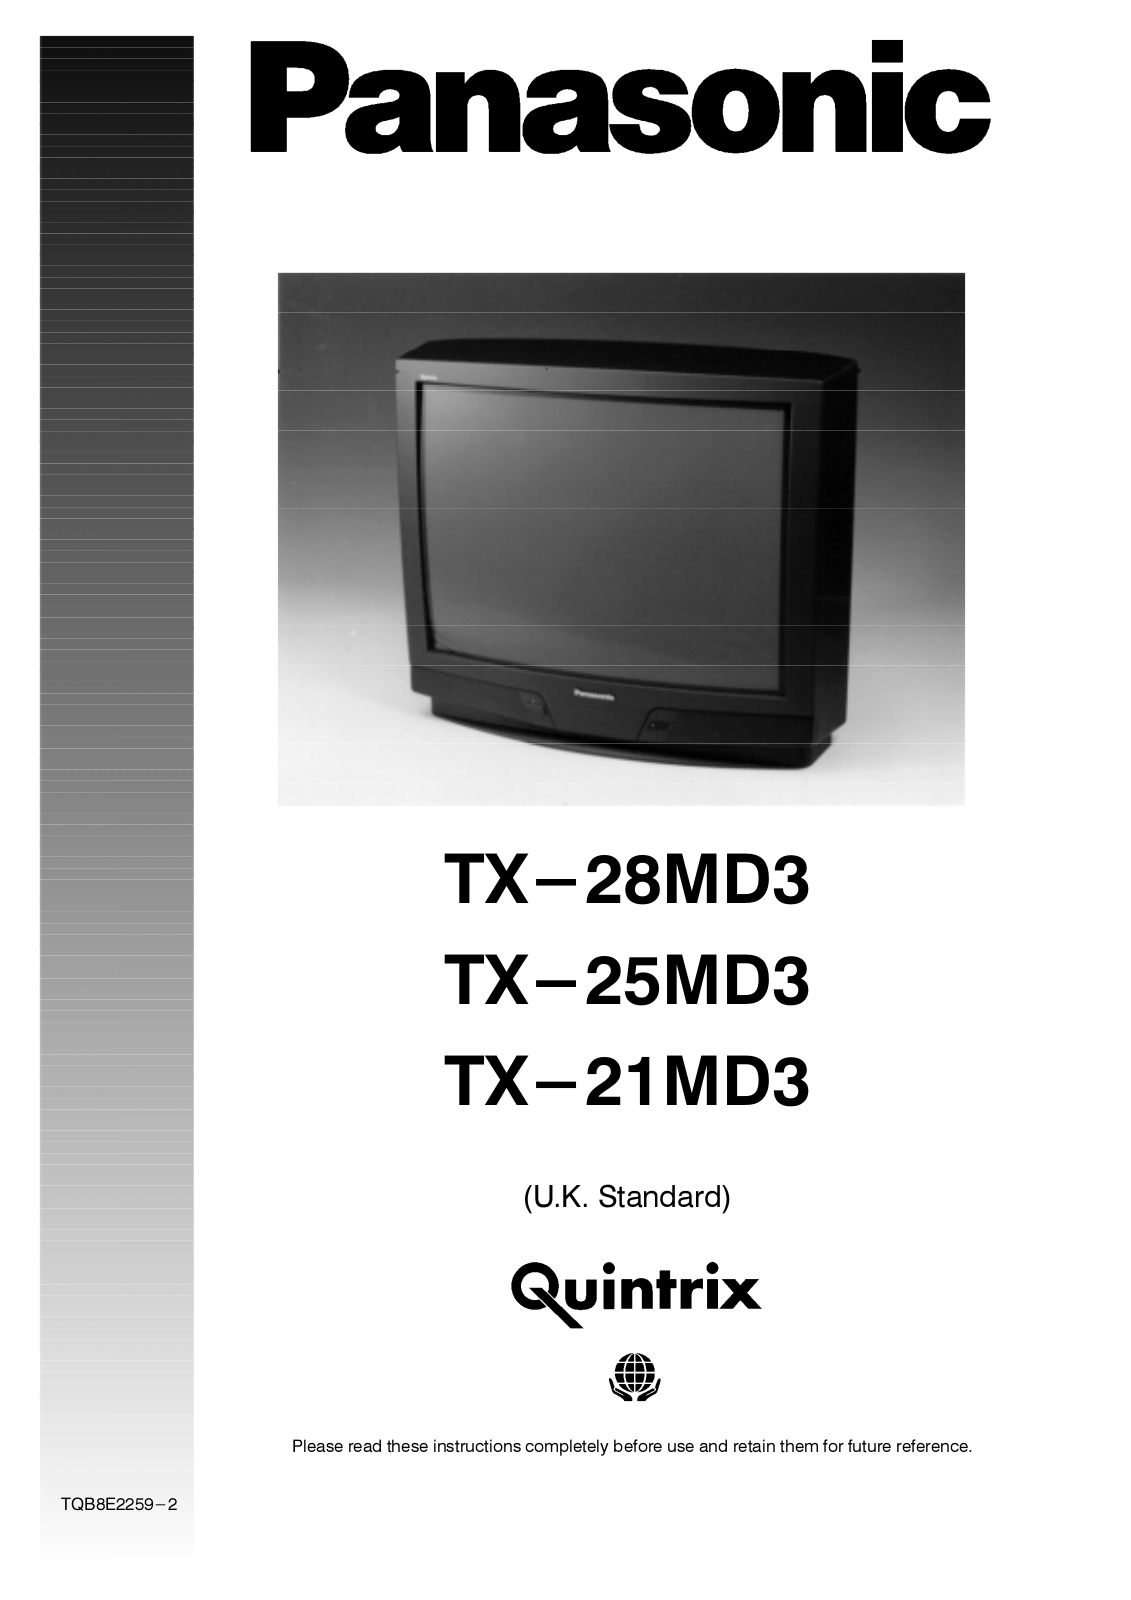 Panasonic TX-25MD3, TX-28MD3, TX-21MD3 User Manual